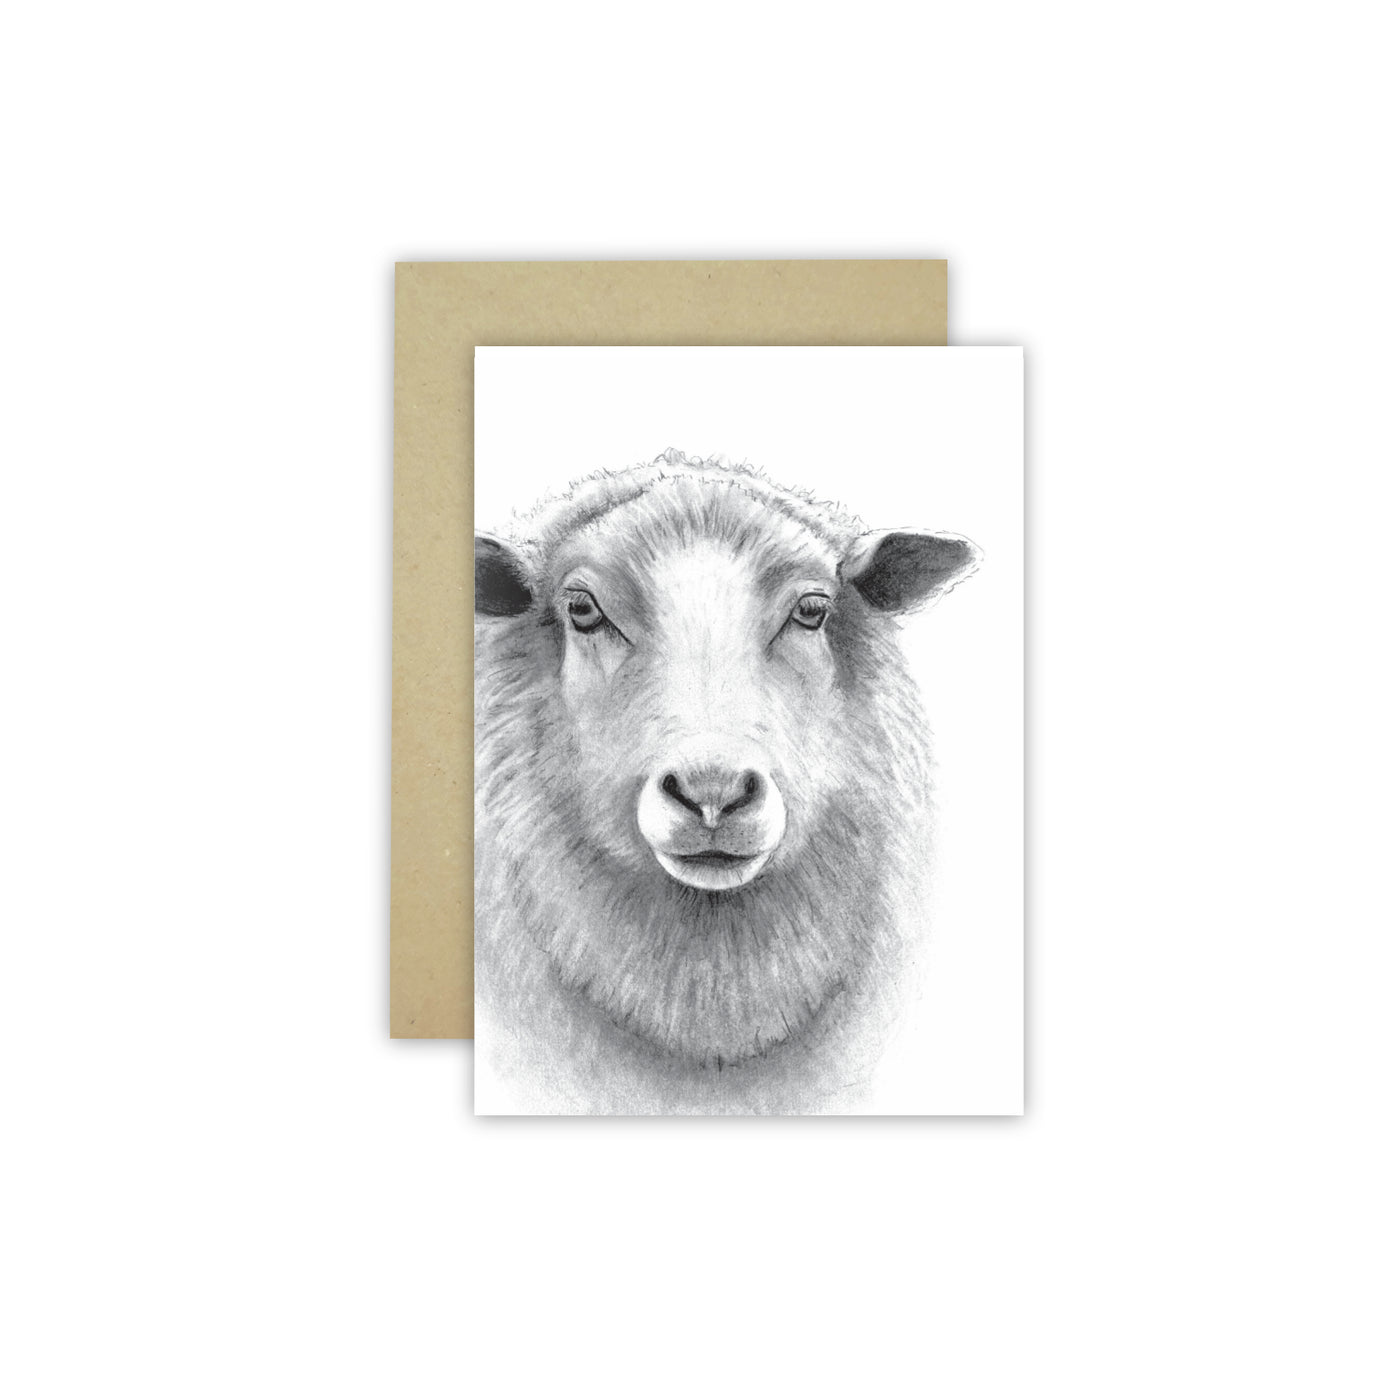 Sheep C6 Card - NEW SIZE